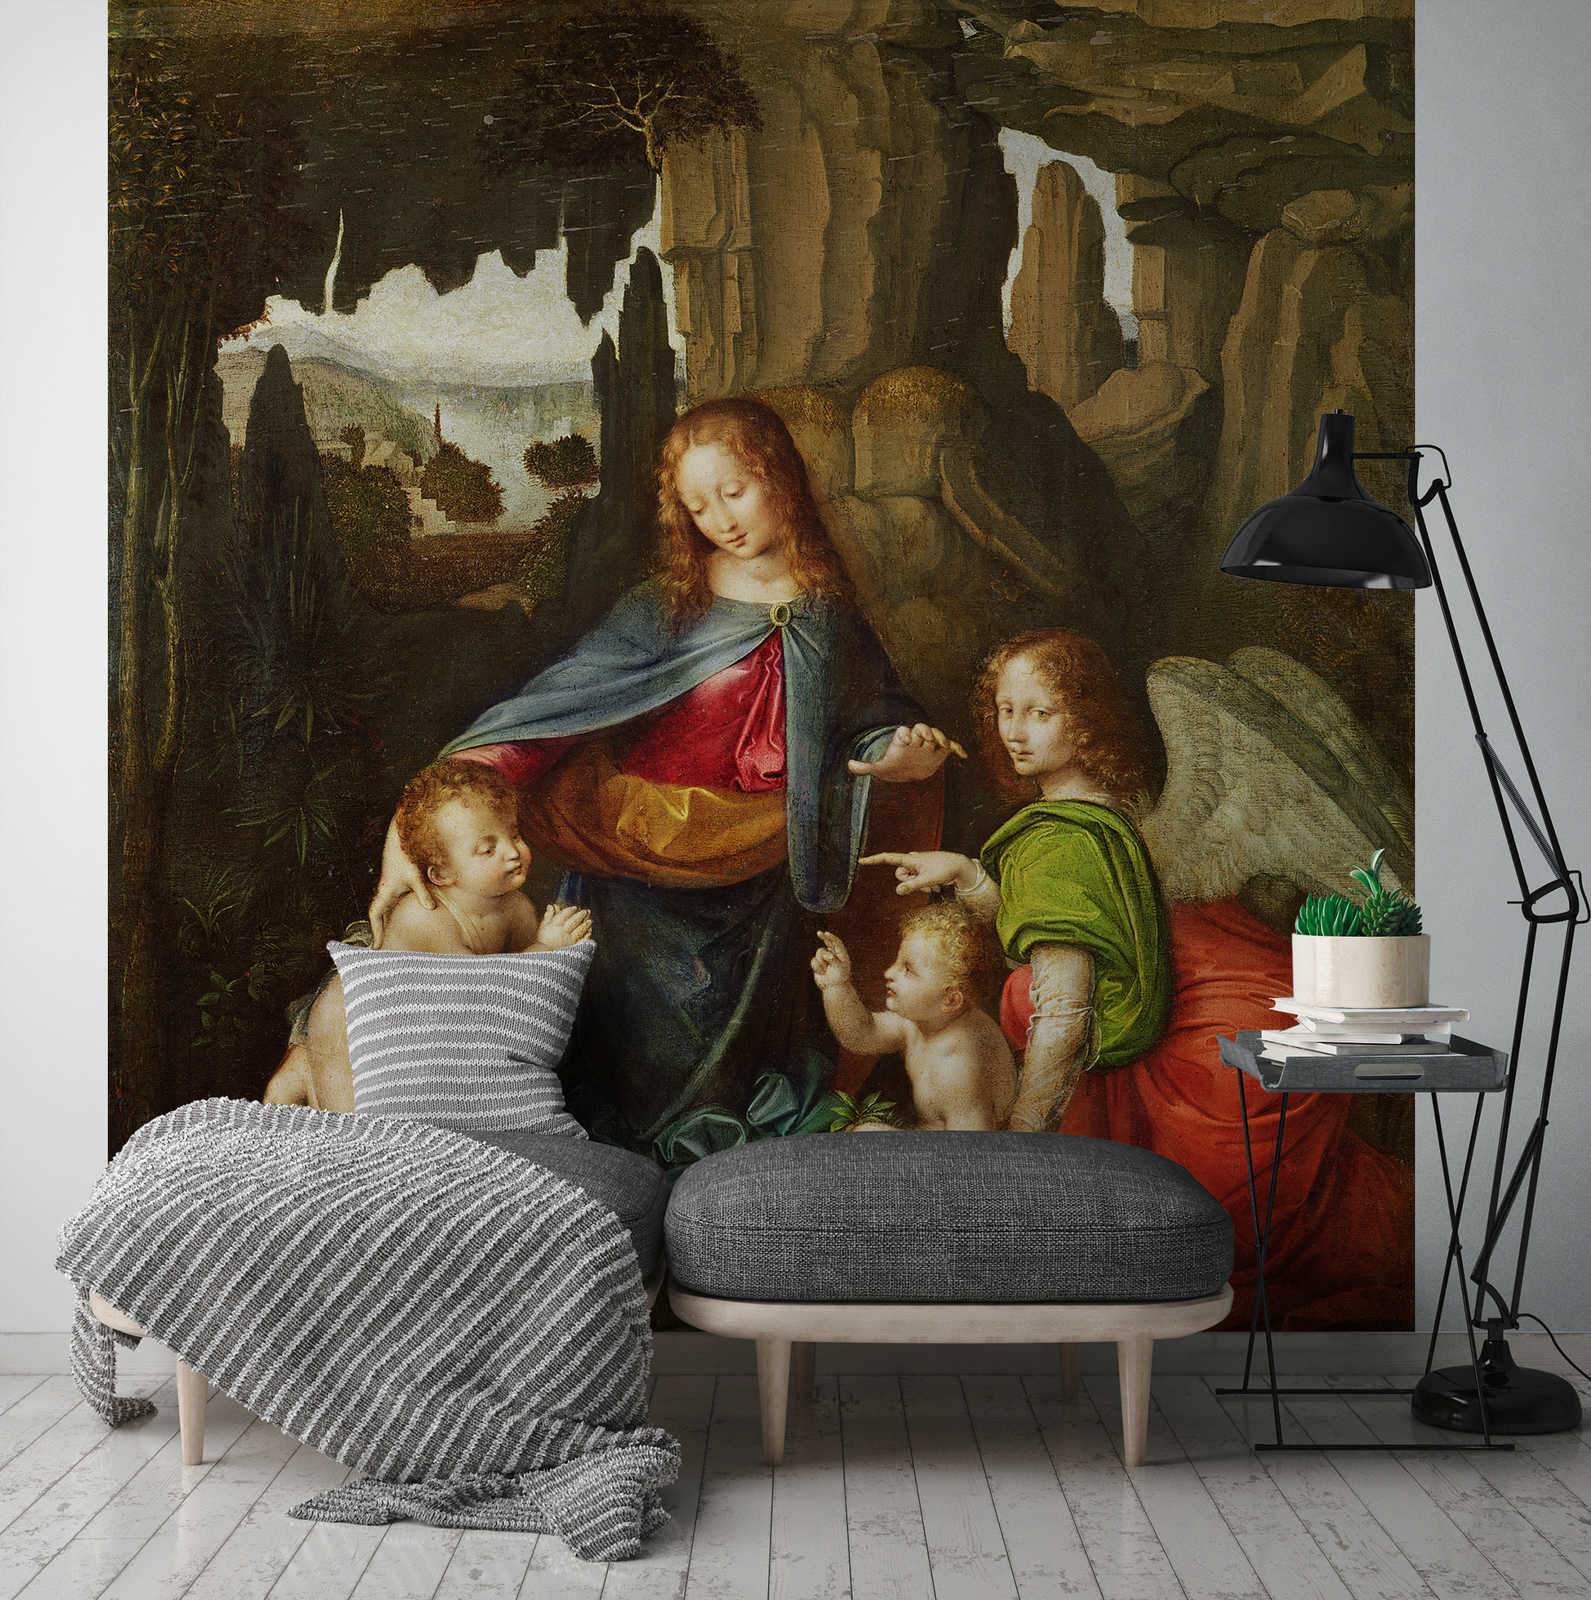             Rotsgrot Madonna" muurschildering van Leonardo da Vinci
        